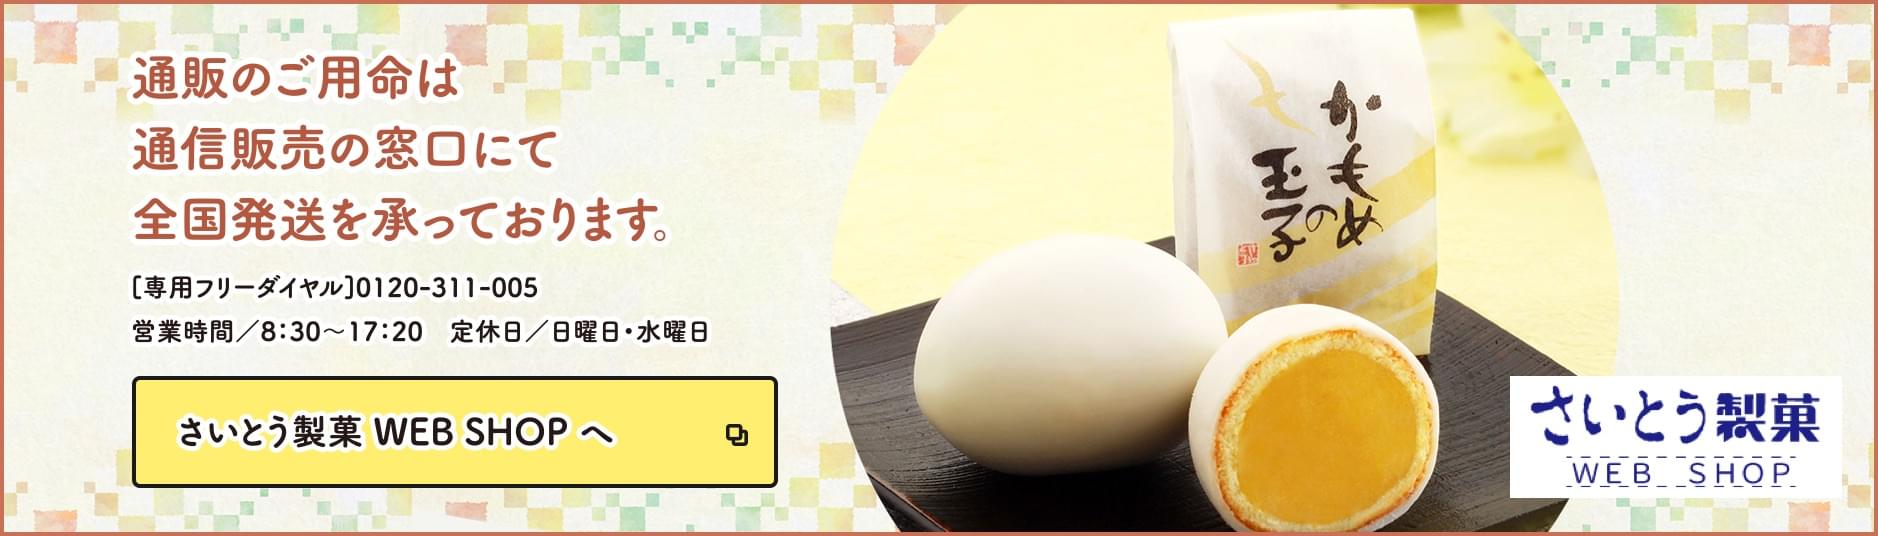 Saito to confectionery WEB SHOP